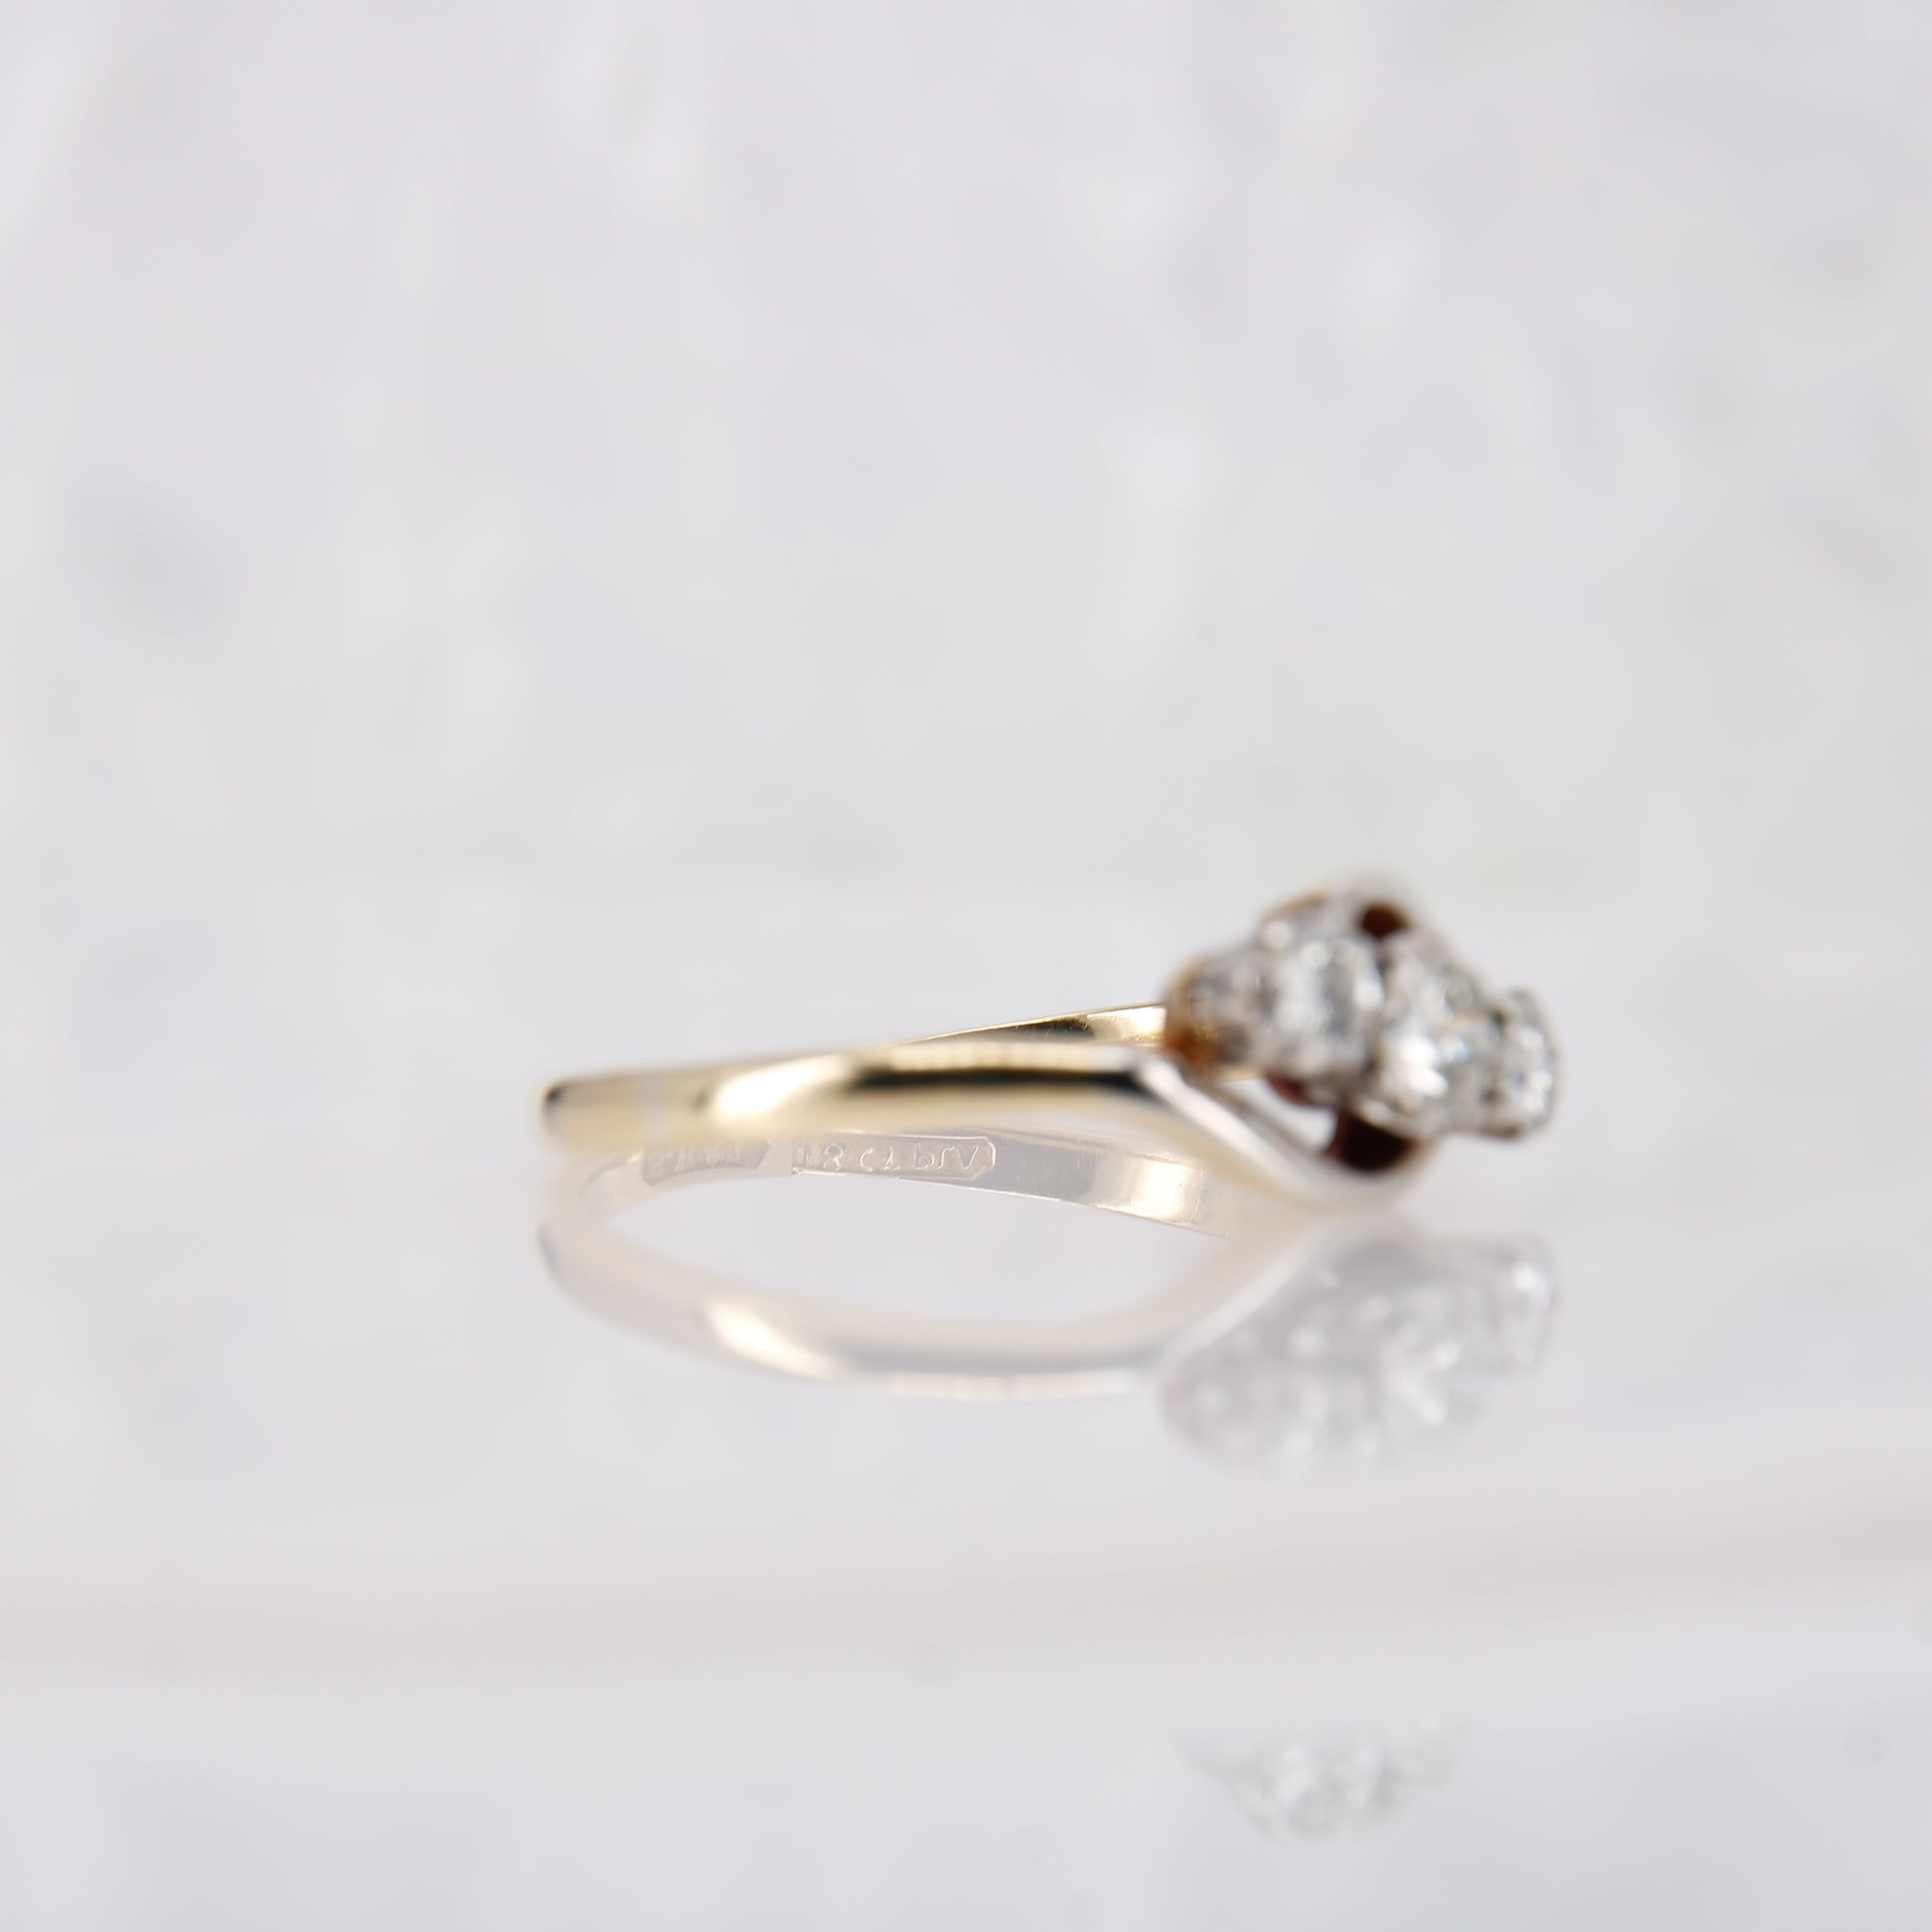 Vintage Circa 1930's Diamond Trilogy Ring set in 18ct Yellow Gold and Platinum. Secondhand Diamond Trilogy Ring.